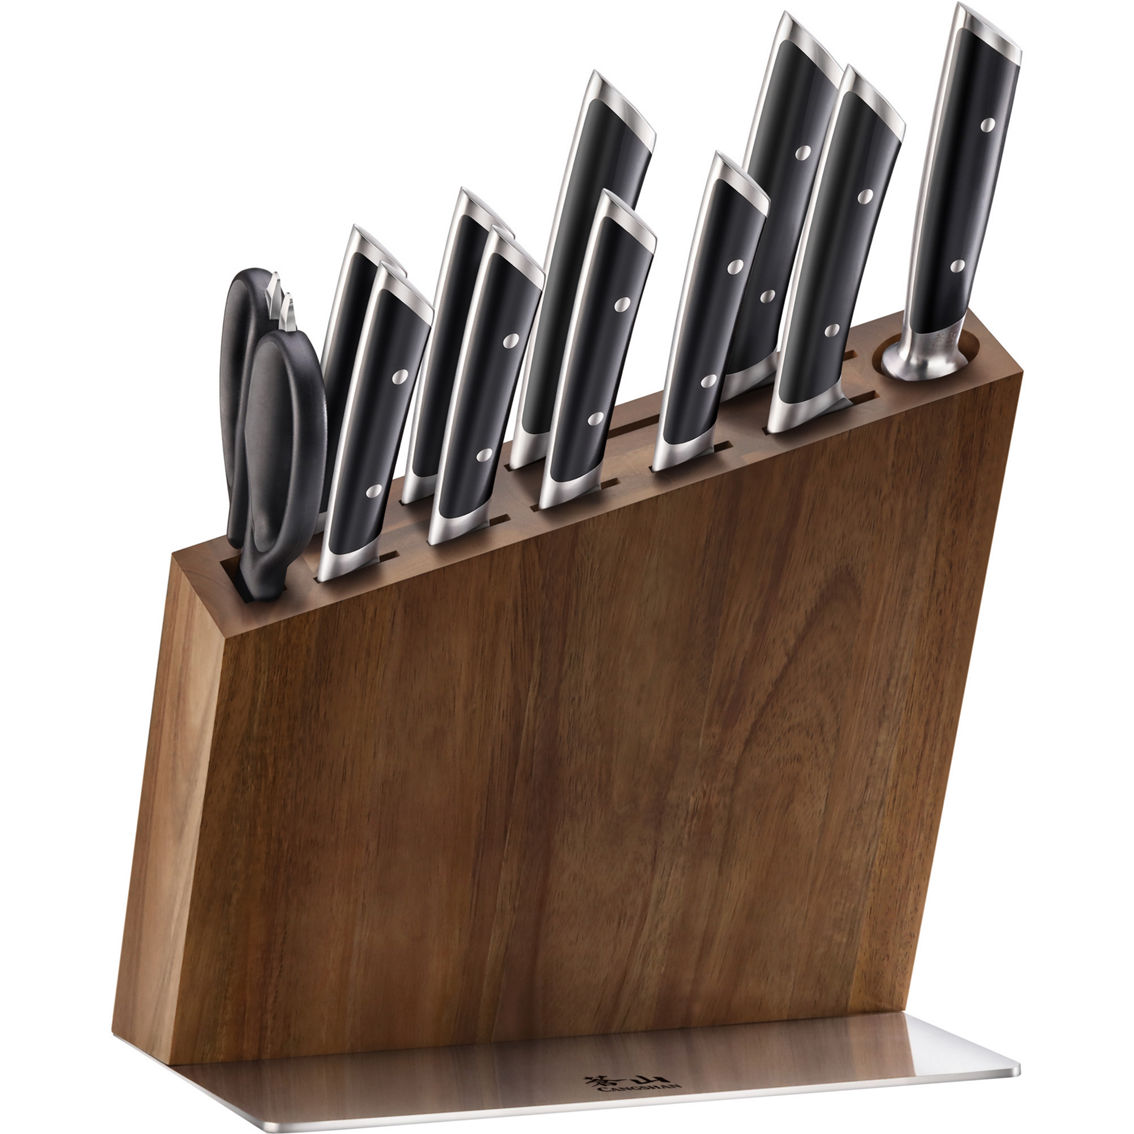 Cangshan Cutlery Helena Series Black Forged 12 pc. Hua Knife Block Set, Acacia - Image 2 of 6